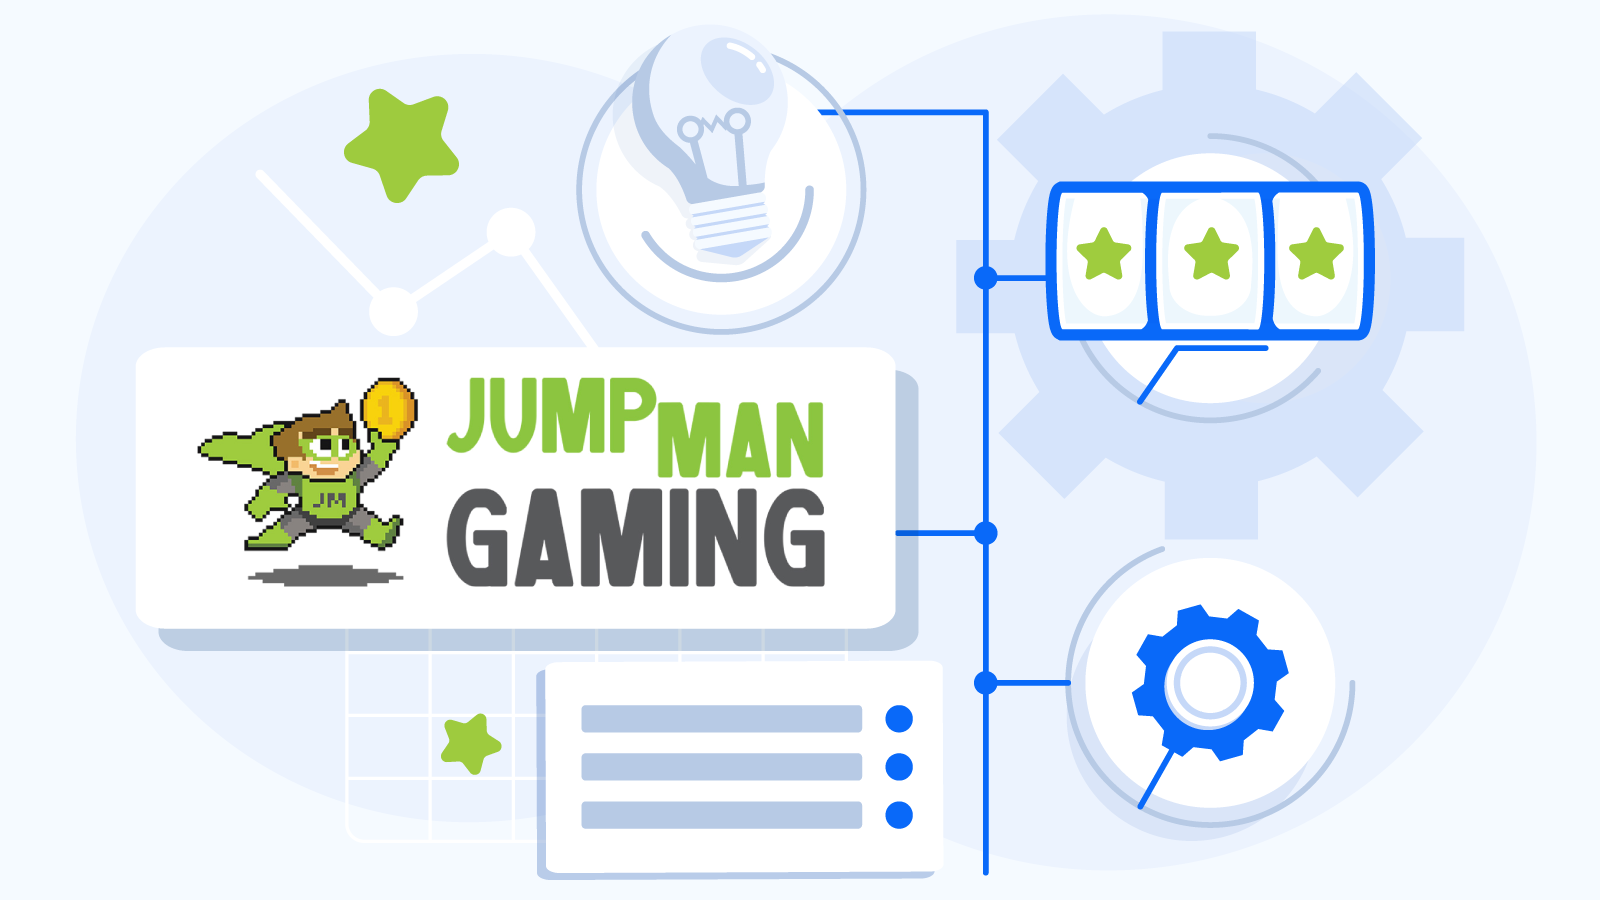 Background-&-Reputation-of-Jumpman-Gaming